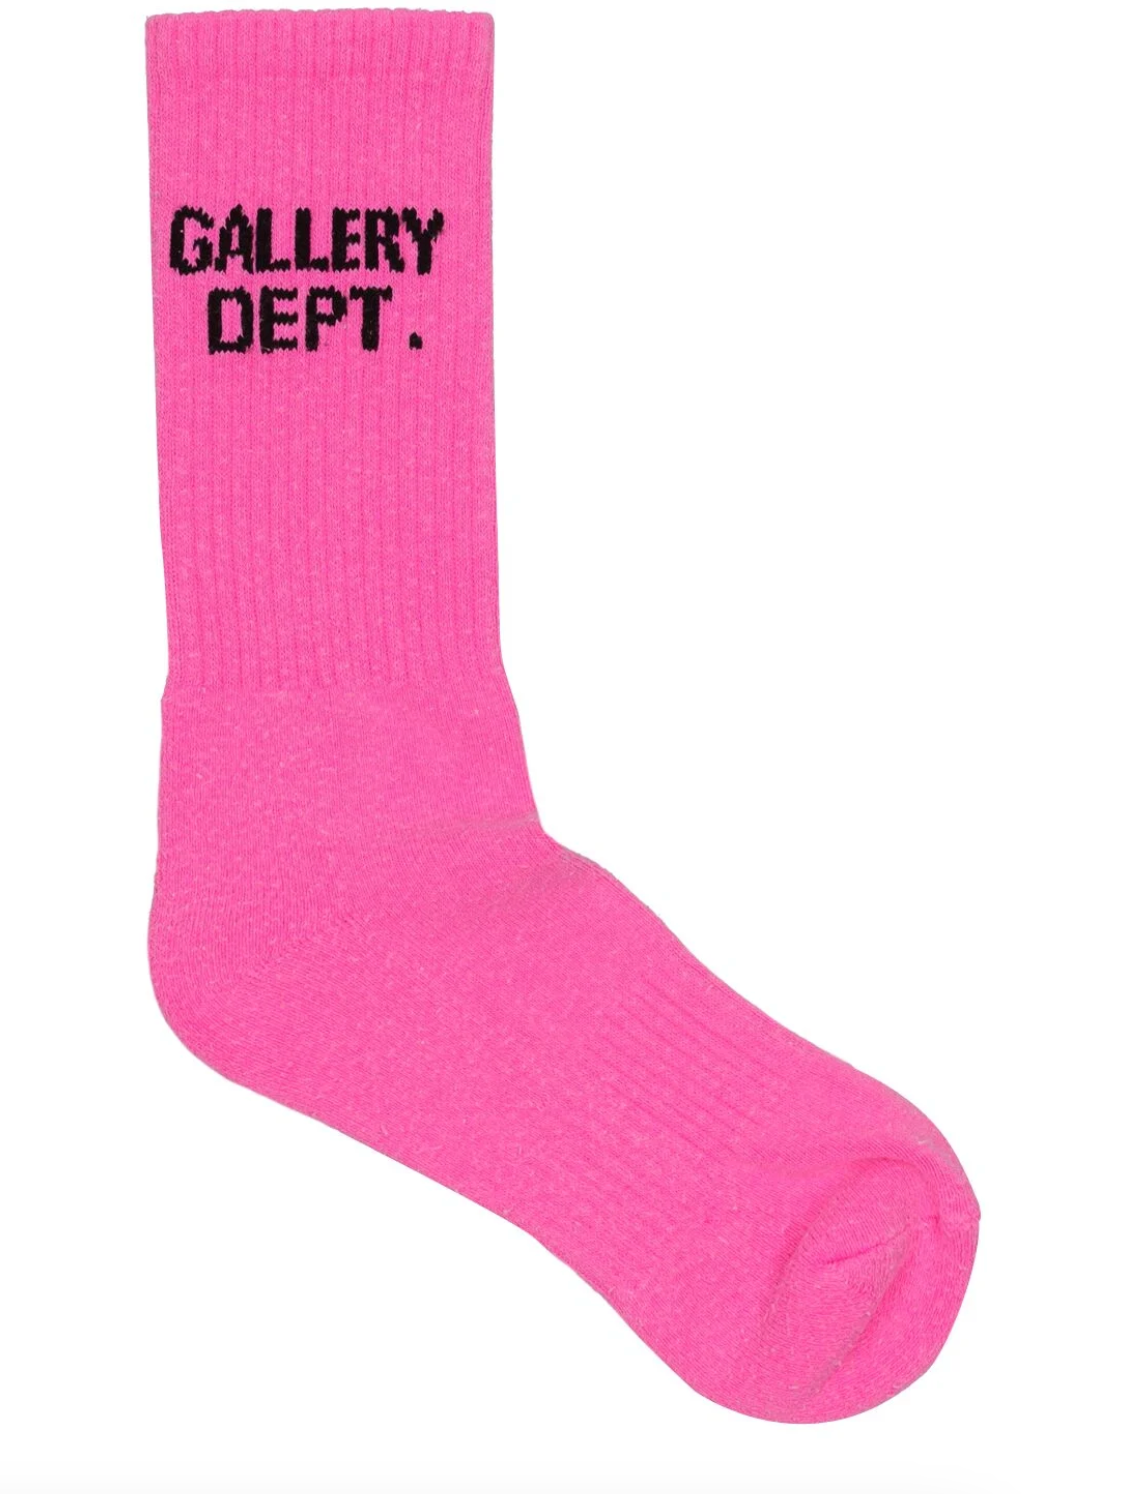 Gallery Dept. Logo Cotton Blend Socks Front Lodz Polska 3